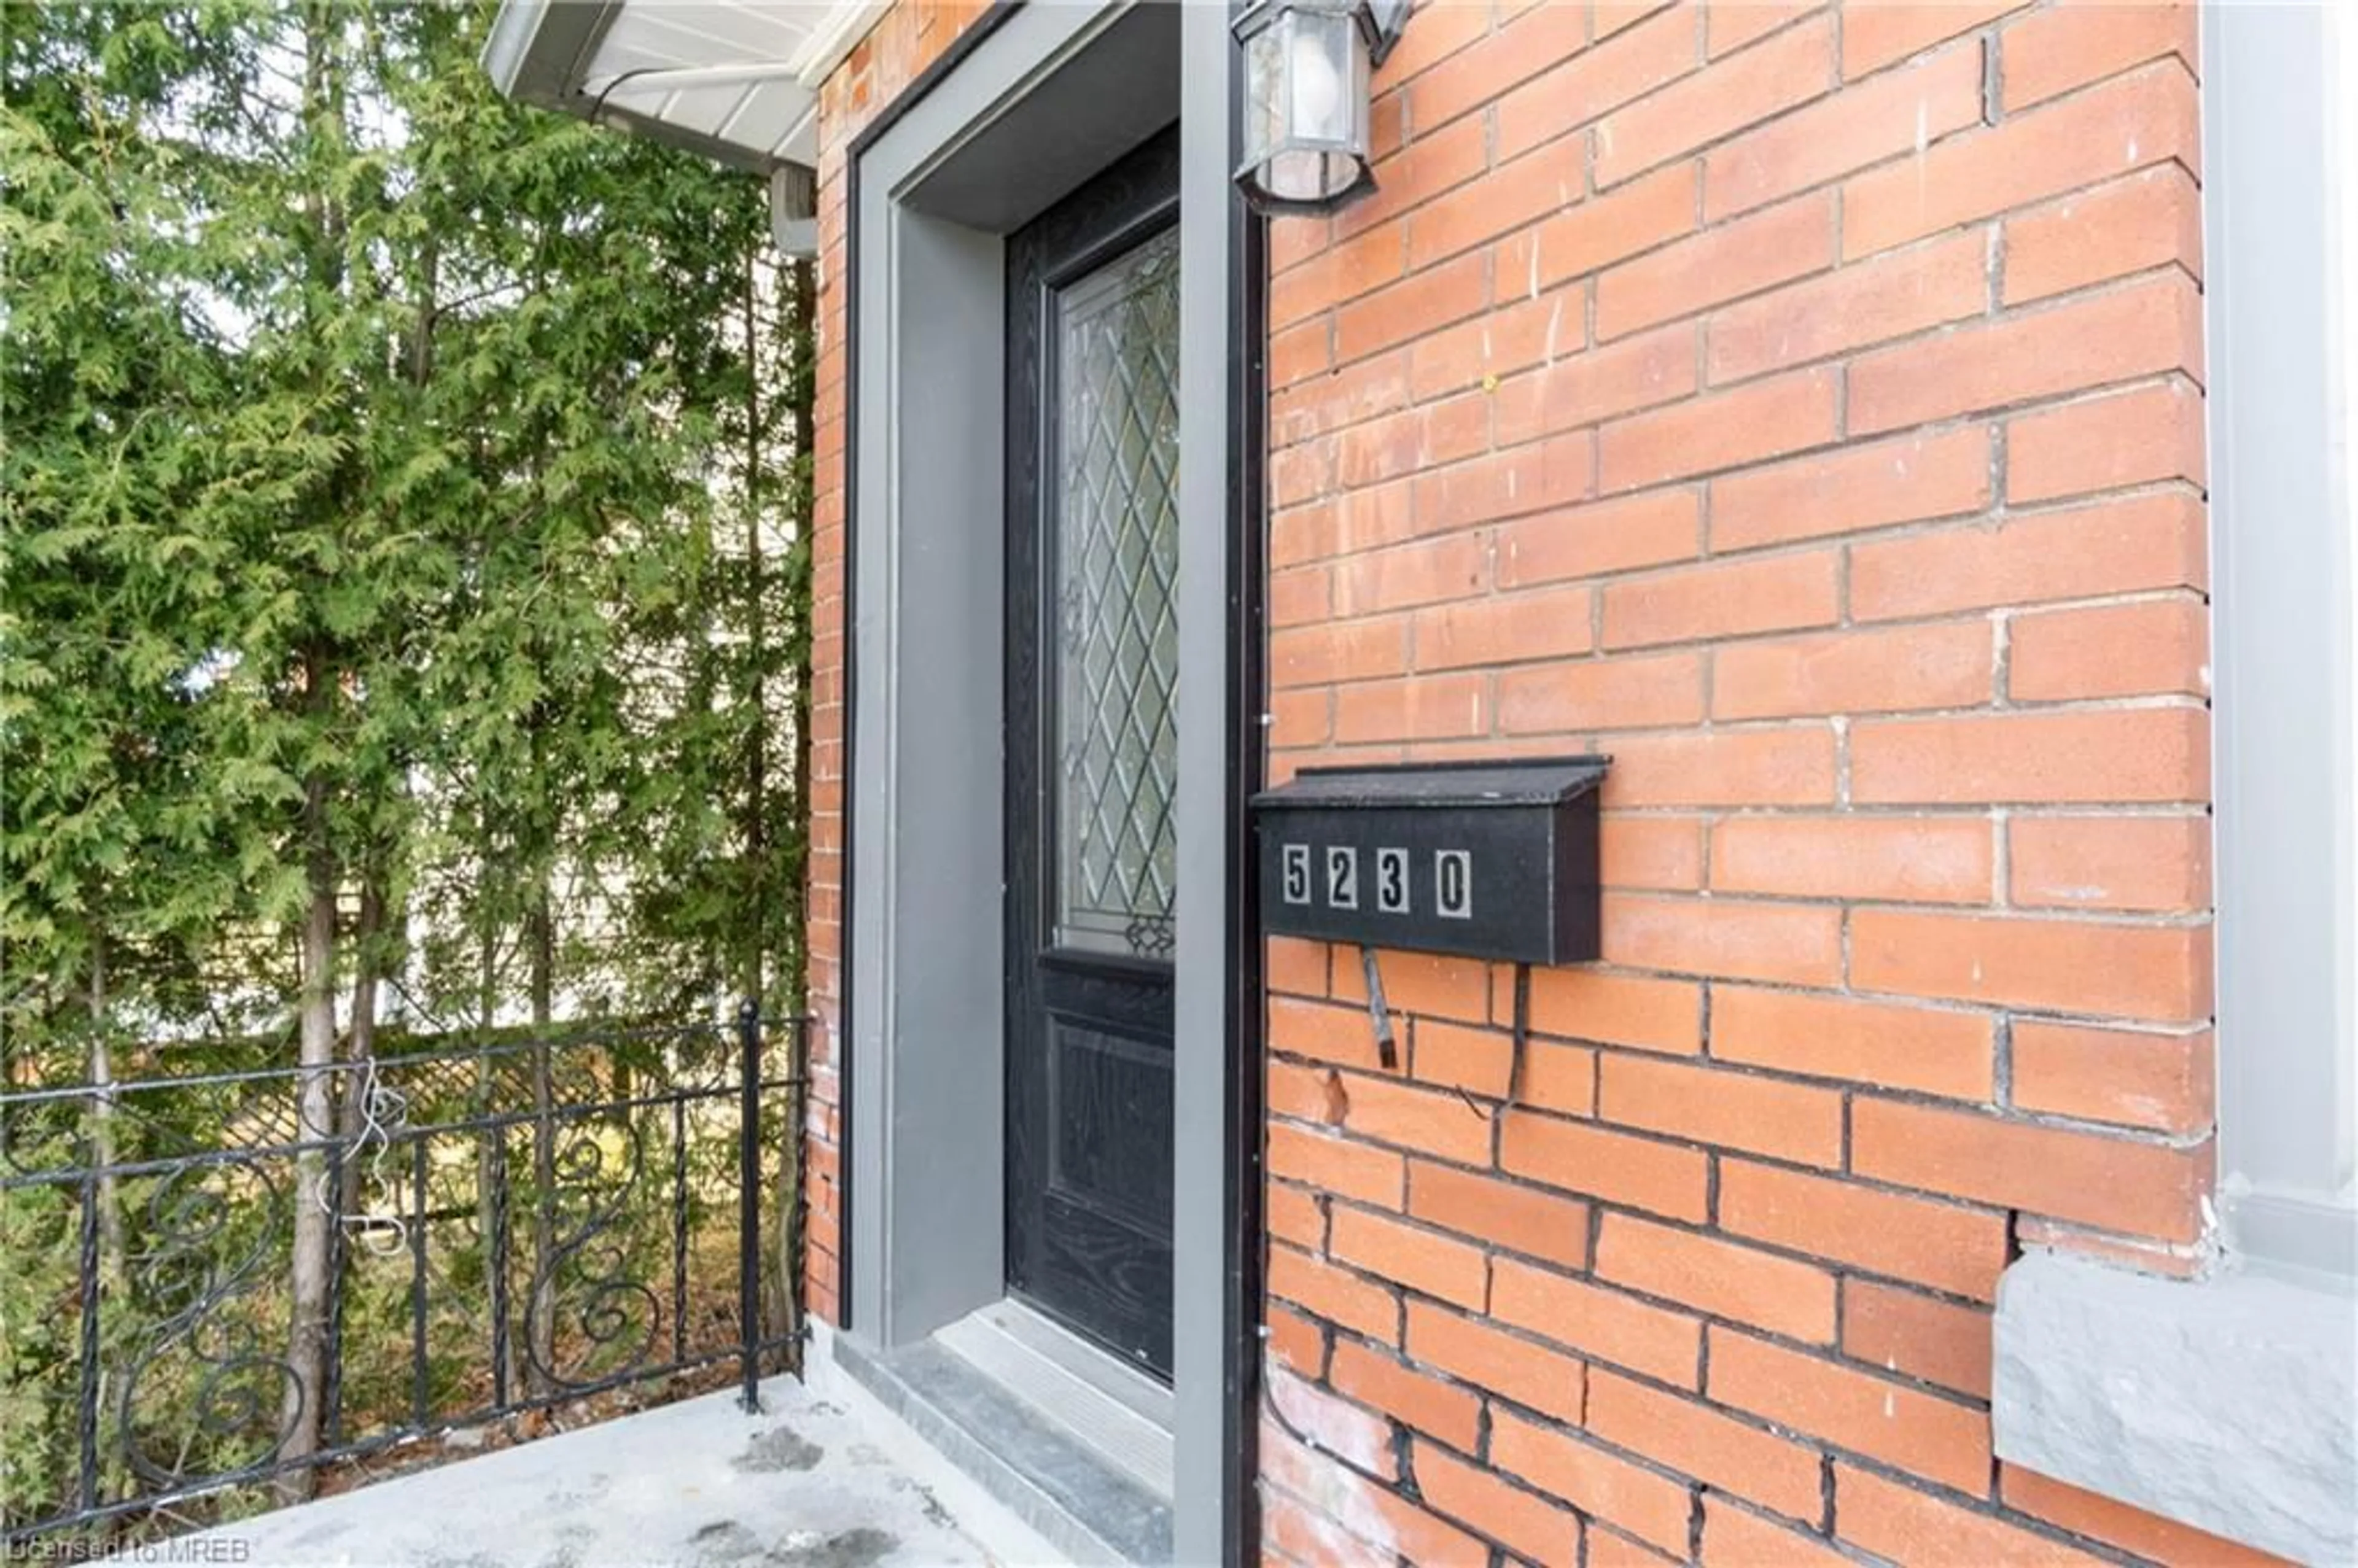 Home with brick exterior material for 5230 Jepson St, Niagara Falls Ontario L2E 1L2